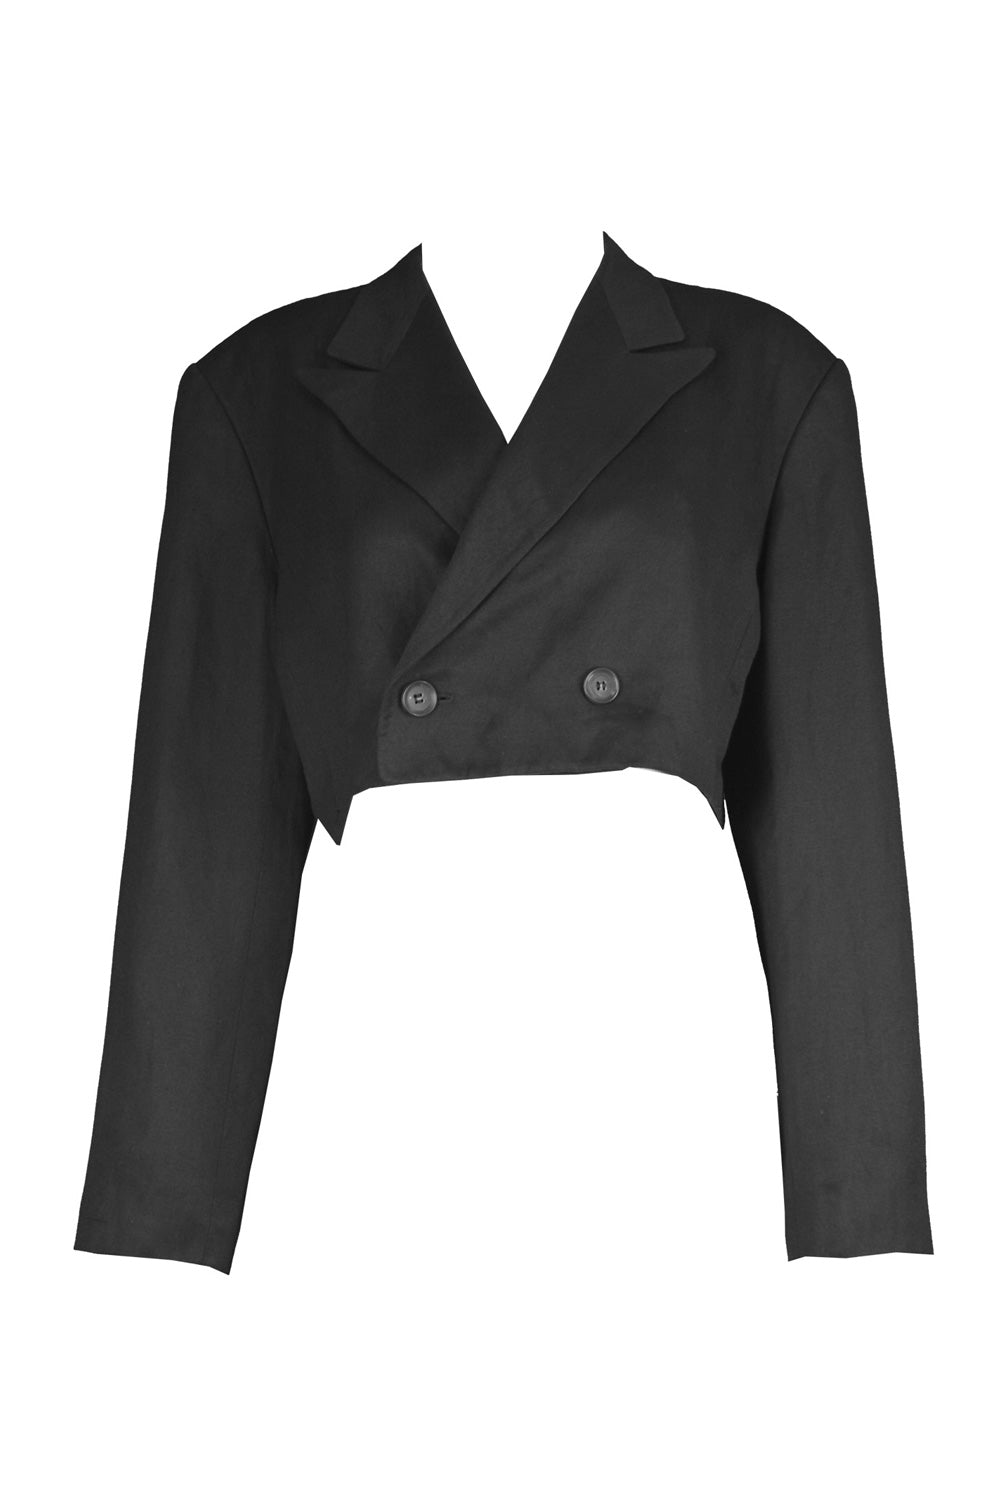 Preowned Black Vintage Cropped Jacket, 1980s